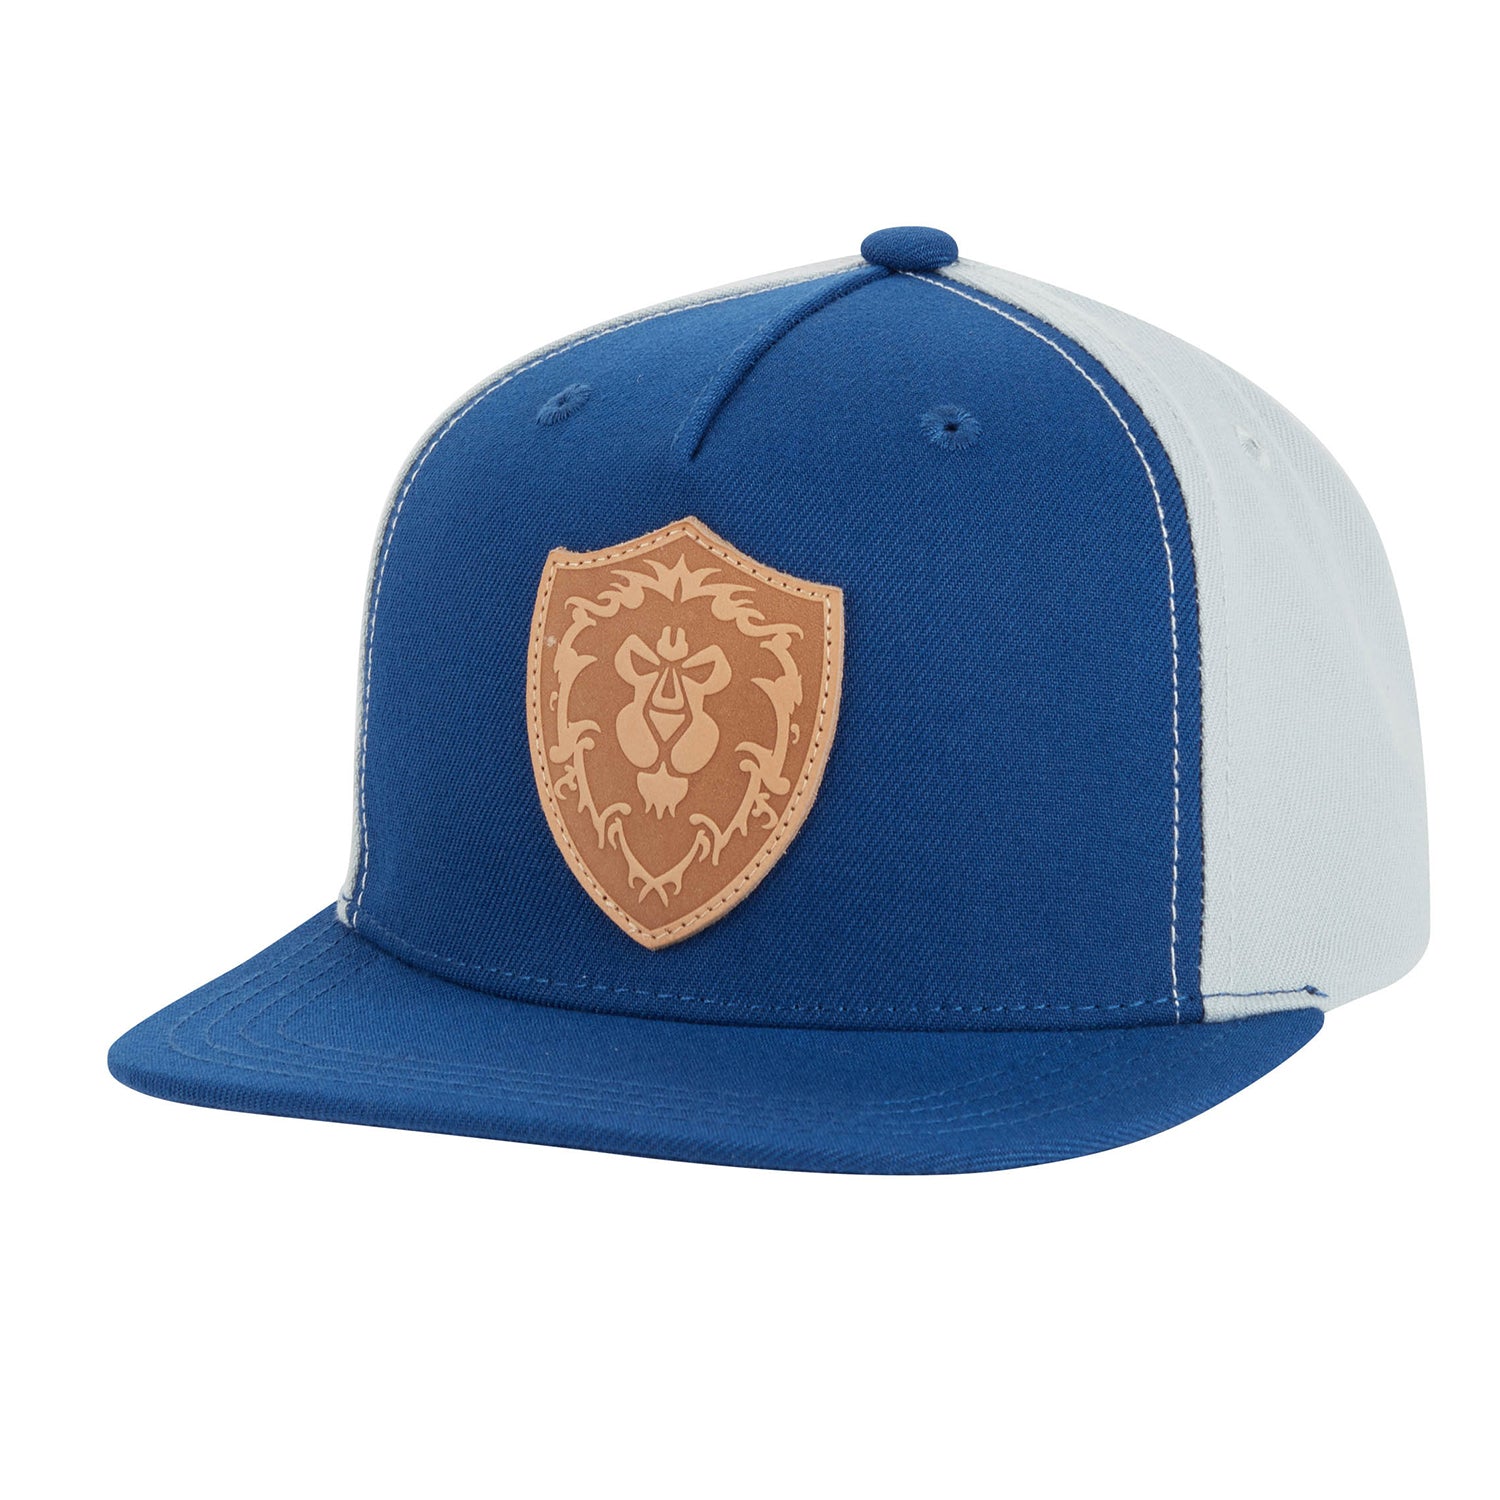 World of Warcraft Alliance J!NX Blue Leather Emblem Patch Flatbill Snapback Hat - Front Left View